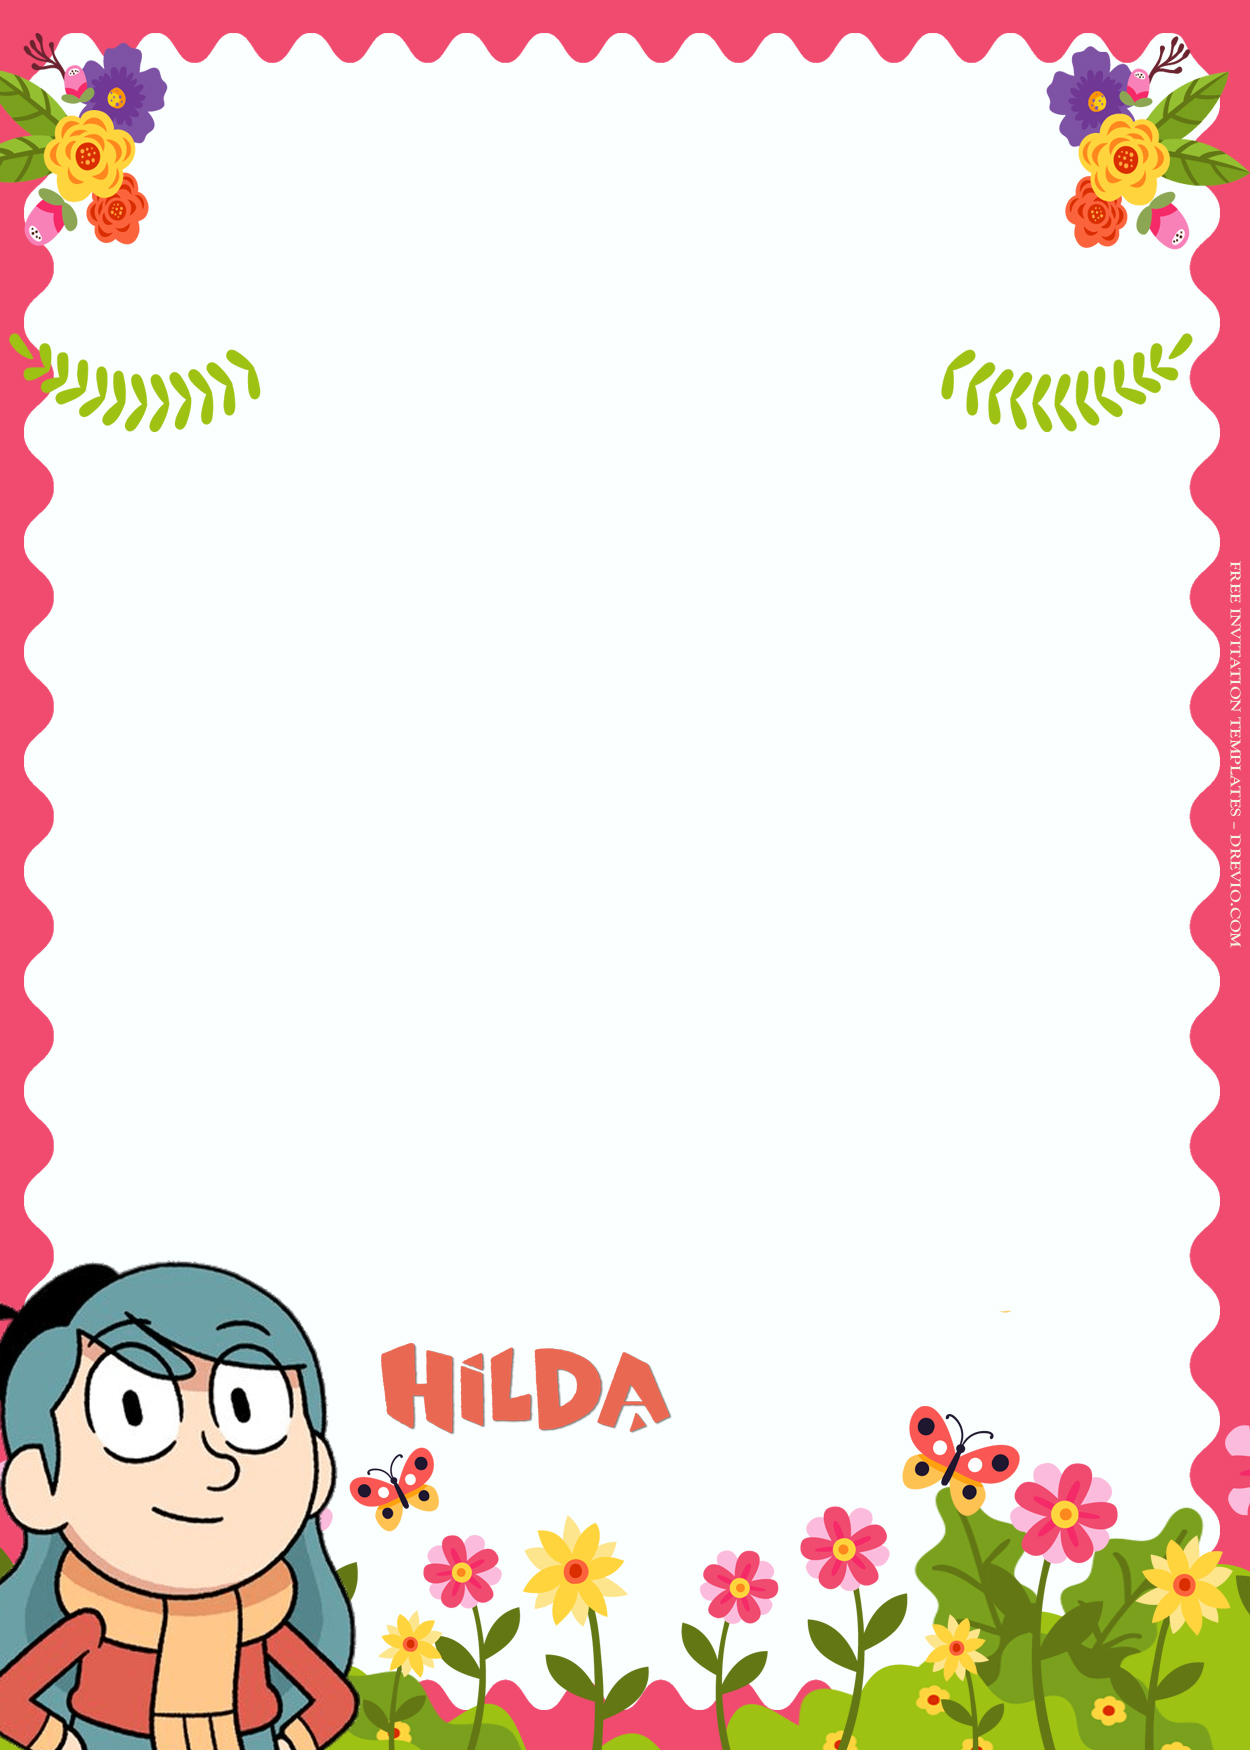 11+ Hilda And Friends Birthday Invitation Templates Two